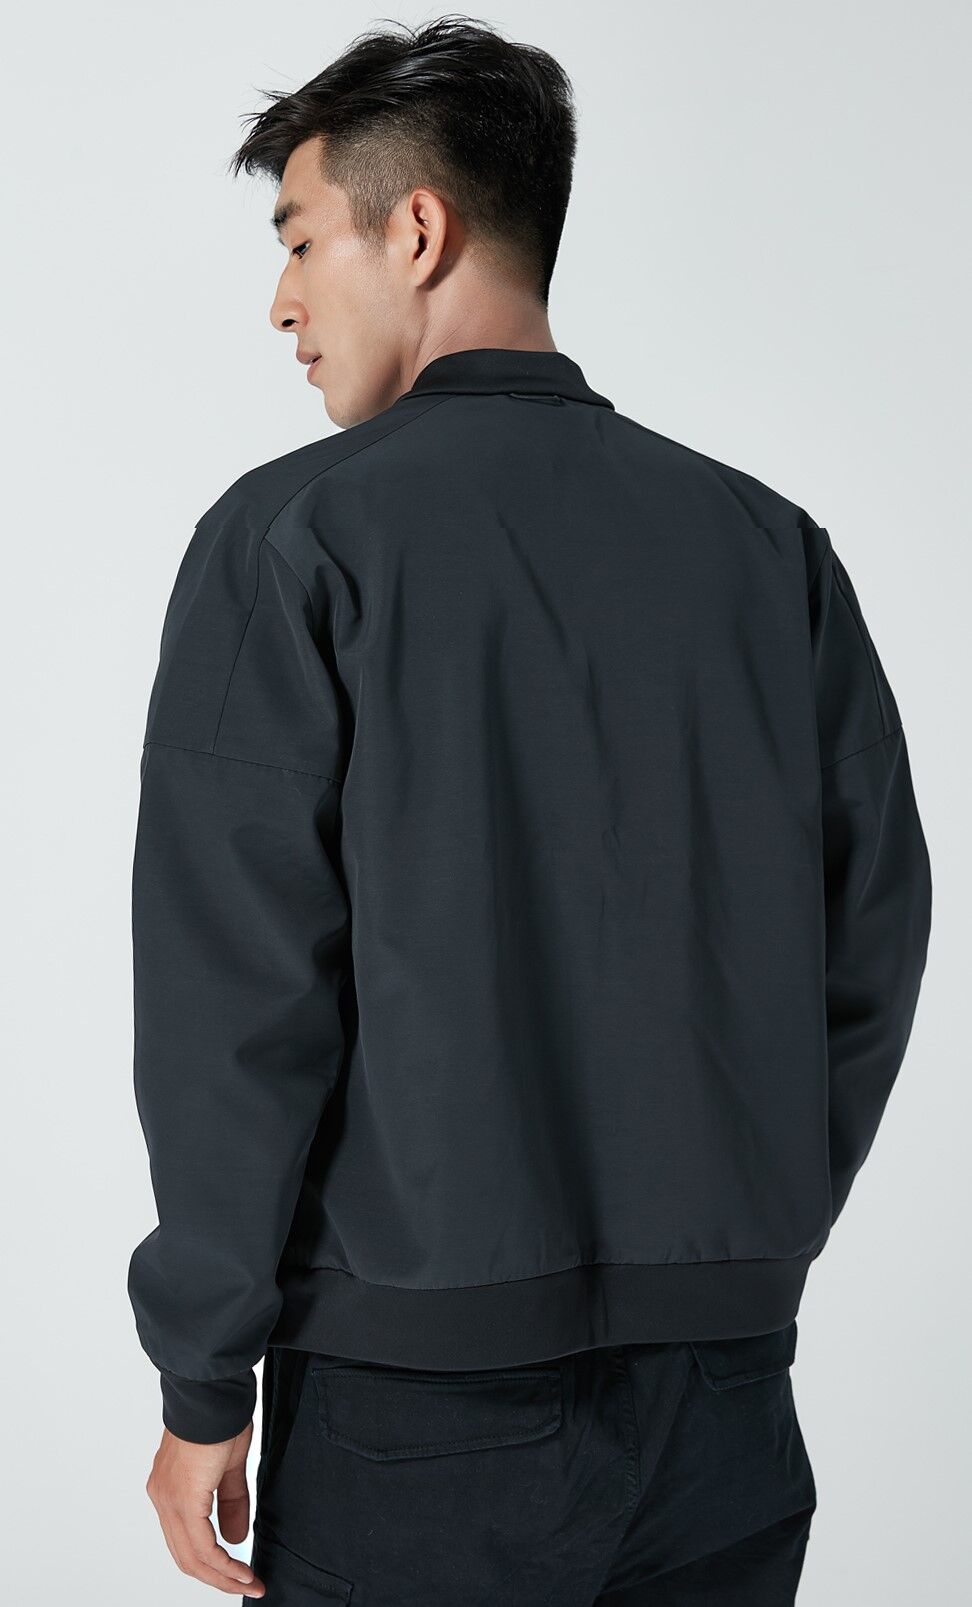 Спортивная куртка для мужчин Ксяоми CottonSmith Quick-Open Zipper Fashion Baseball Jacket 